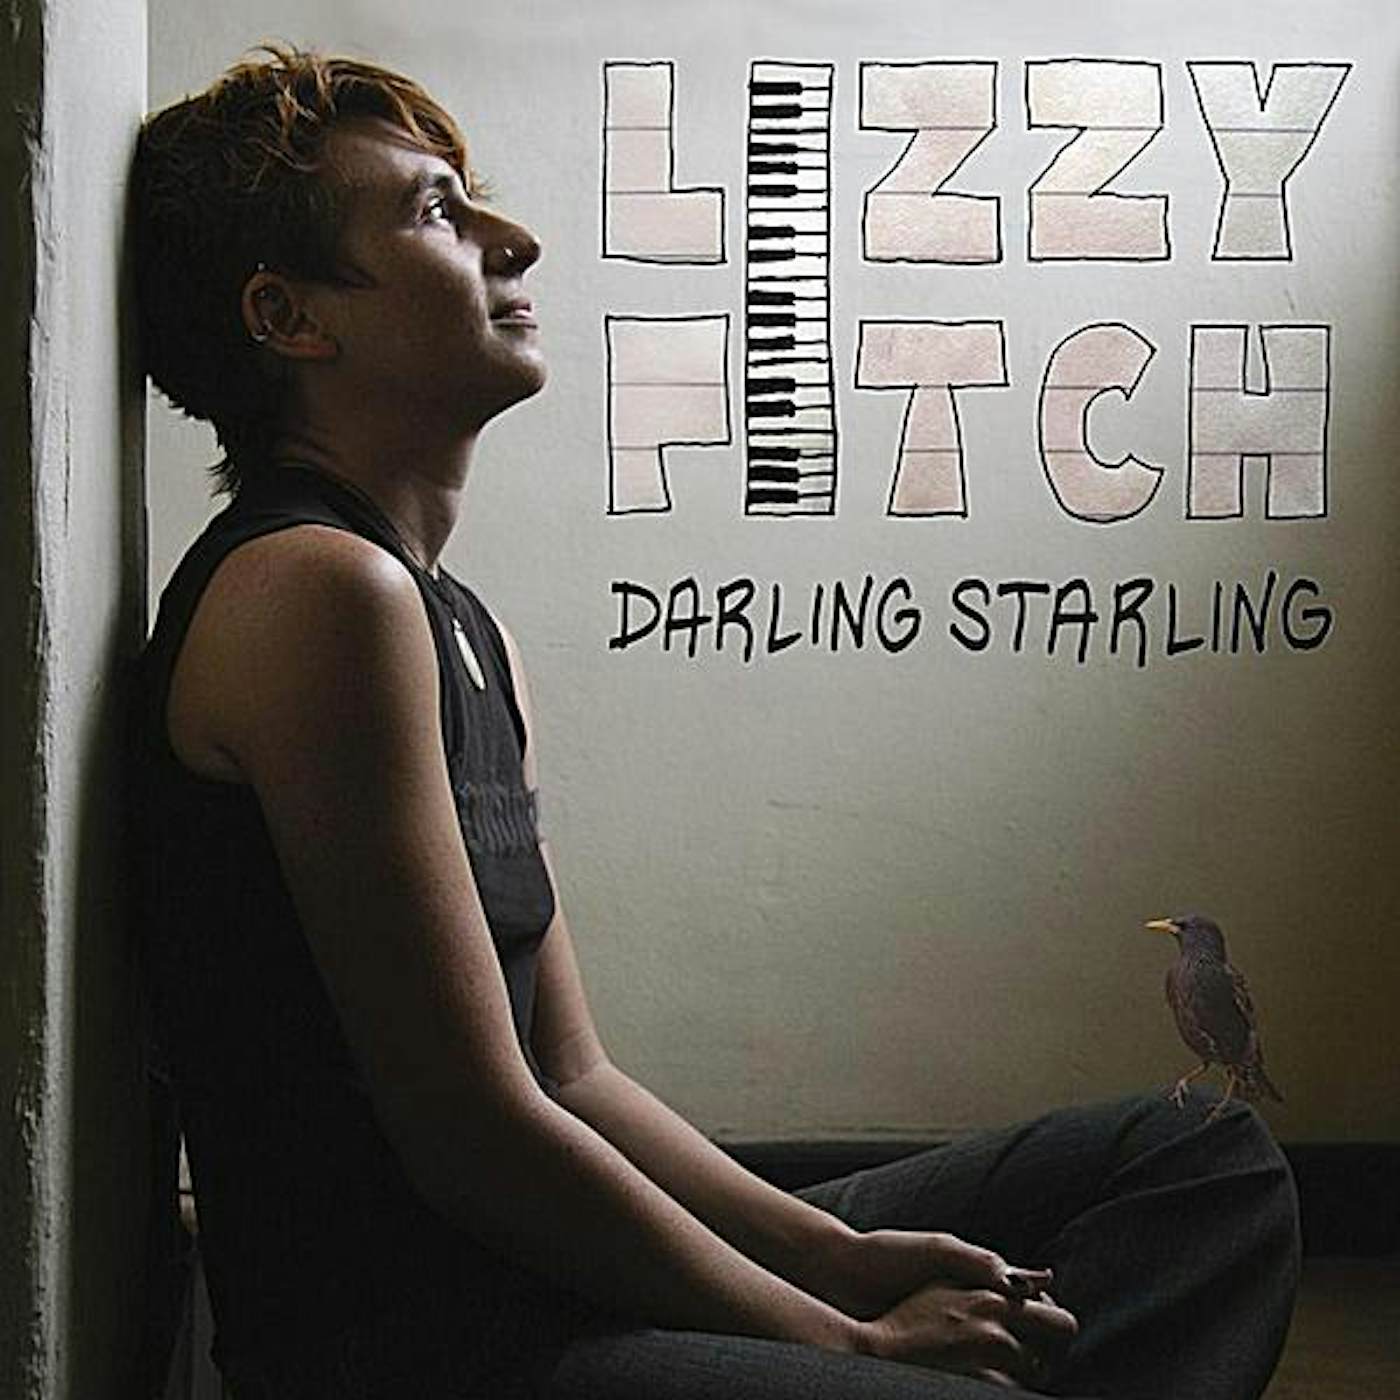 Lizzy Pitch DARLING STARLING CD